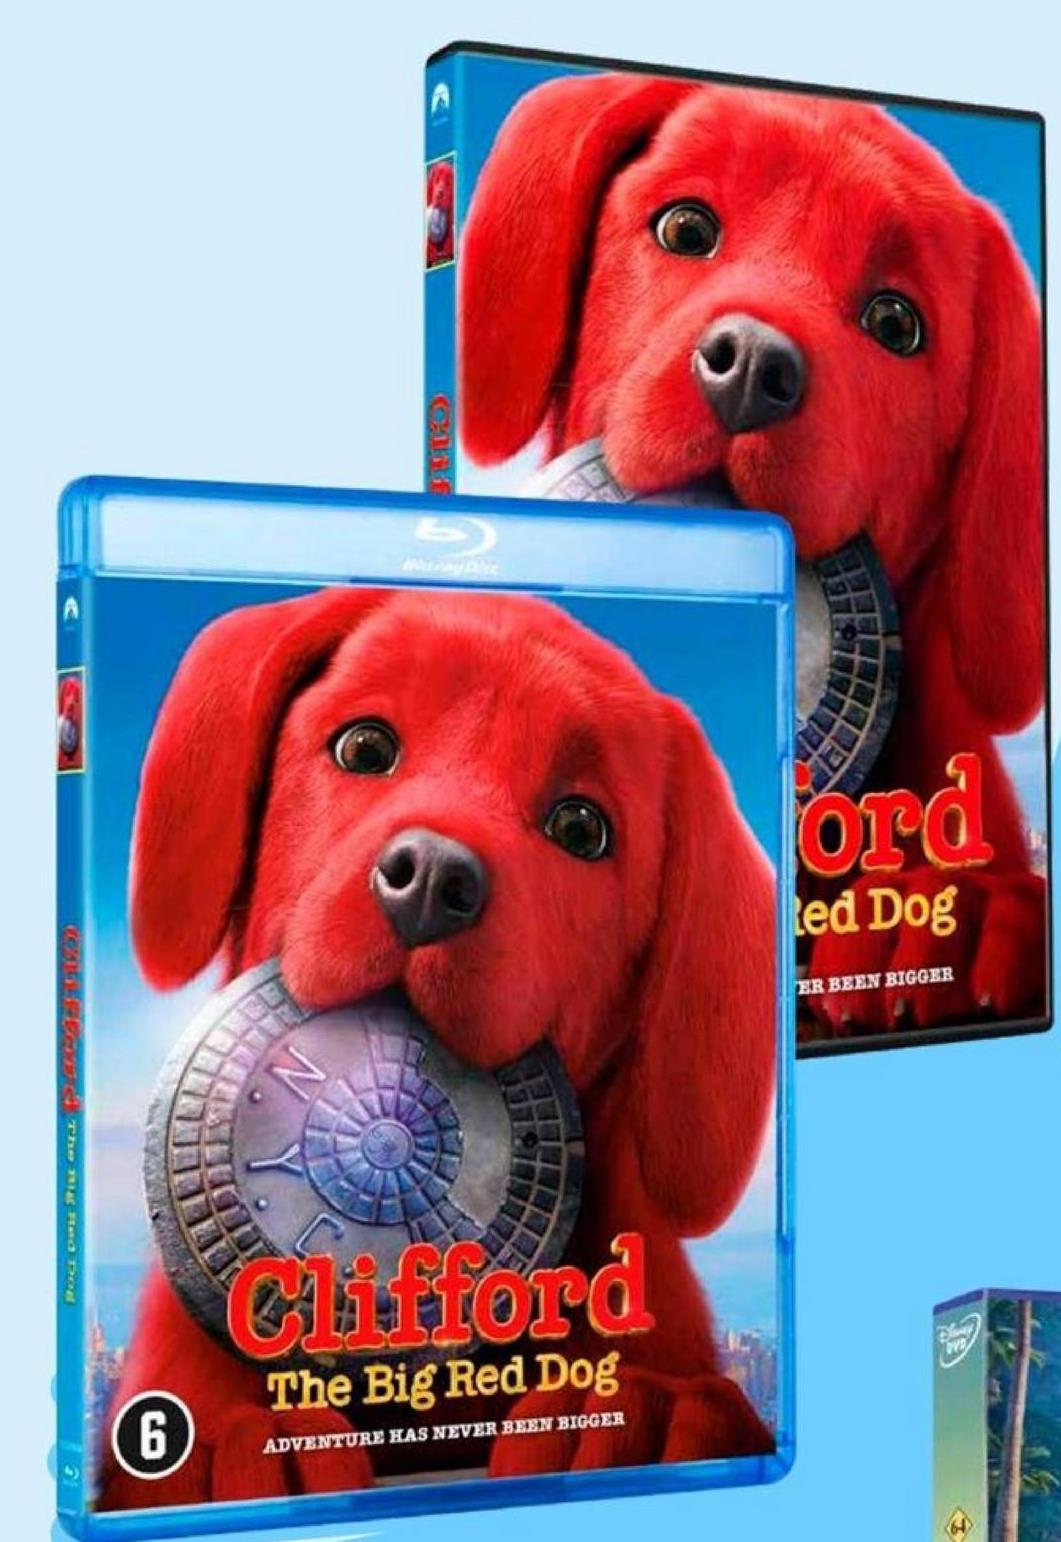 ord
Led Dog
ER BEEN BIGGER
Gibrord
DVD
The Big Red Dog
6
ADVENTURE HAS NEVER BEEN BIGGER
